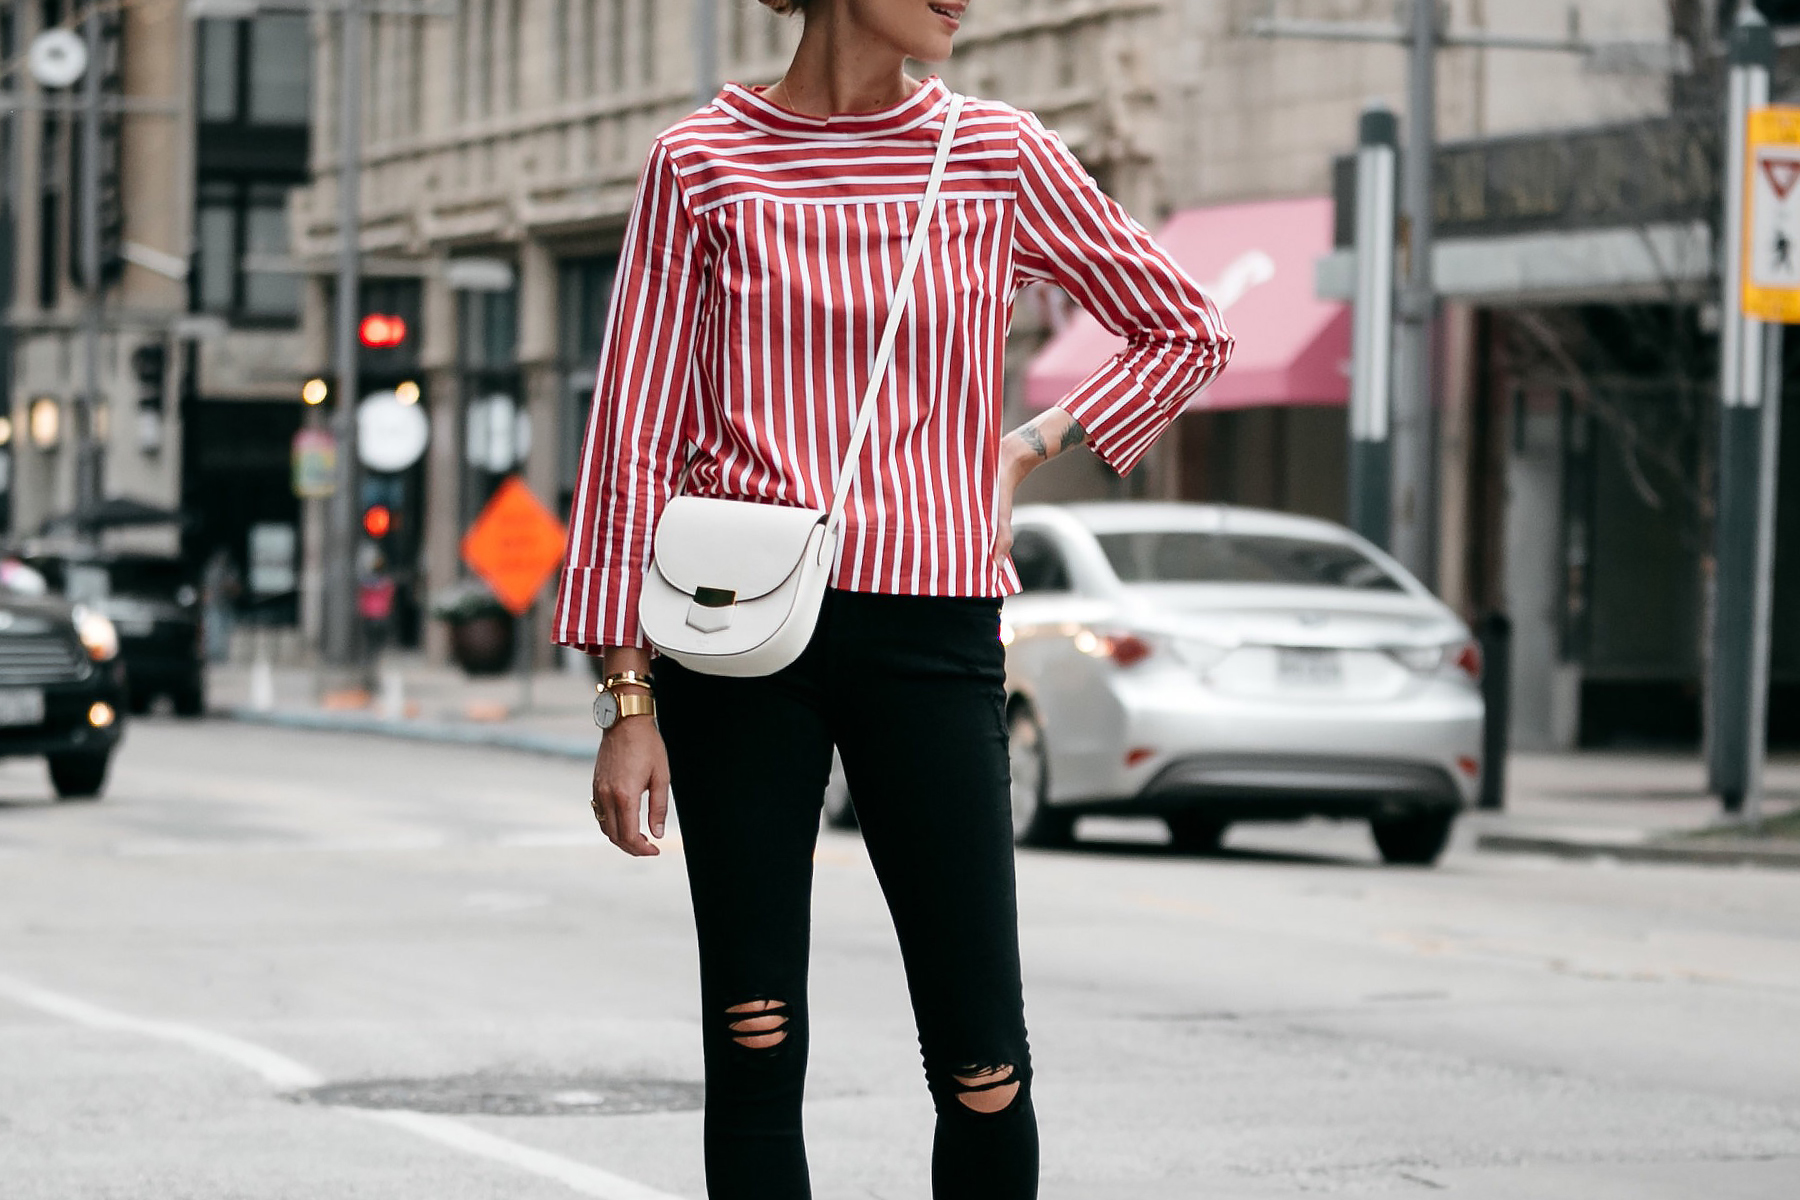 Jcrew Red White Striped Shirt Celine White Trotteur Handbag Black Ripped Skinny Jeans Fashion Jackson Dallas Blogger Fashion Blogger Street Style